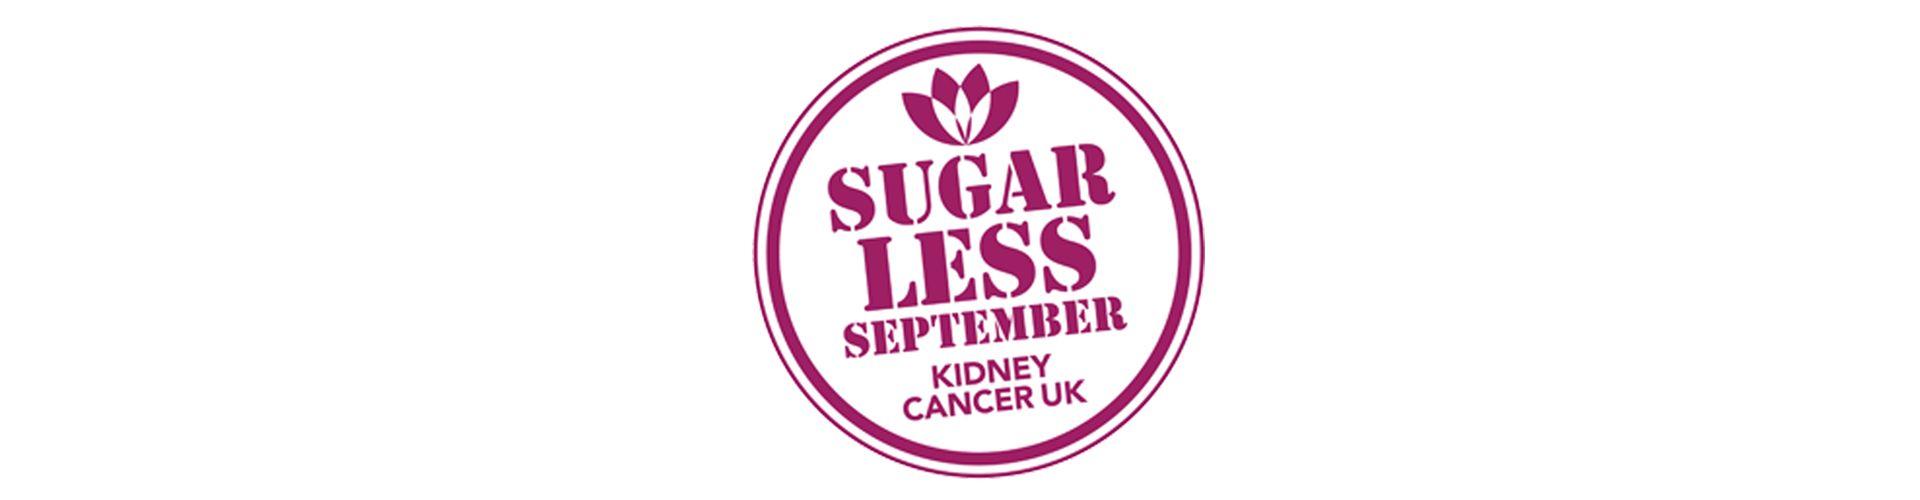 The Sugar Circle Logo - Kidney Cancer UK Sugar Less September - Kidney Cancer UK